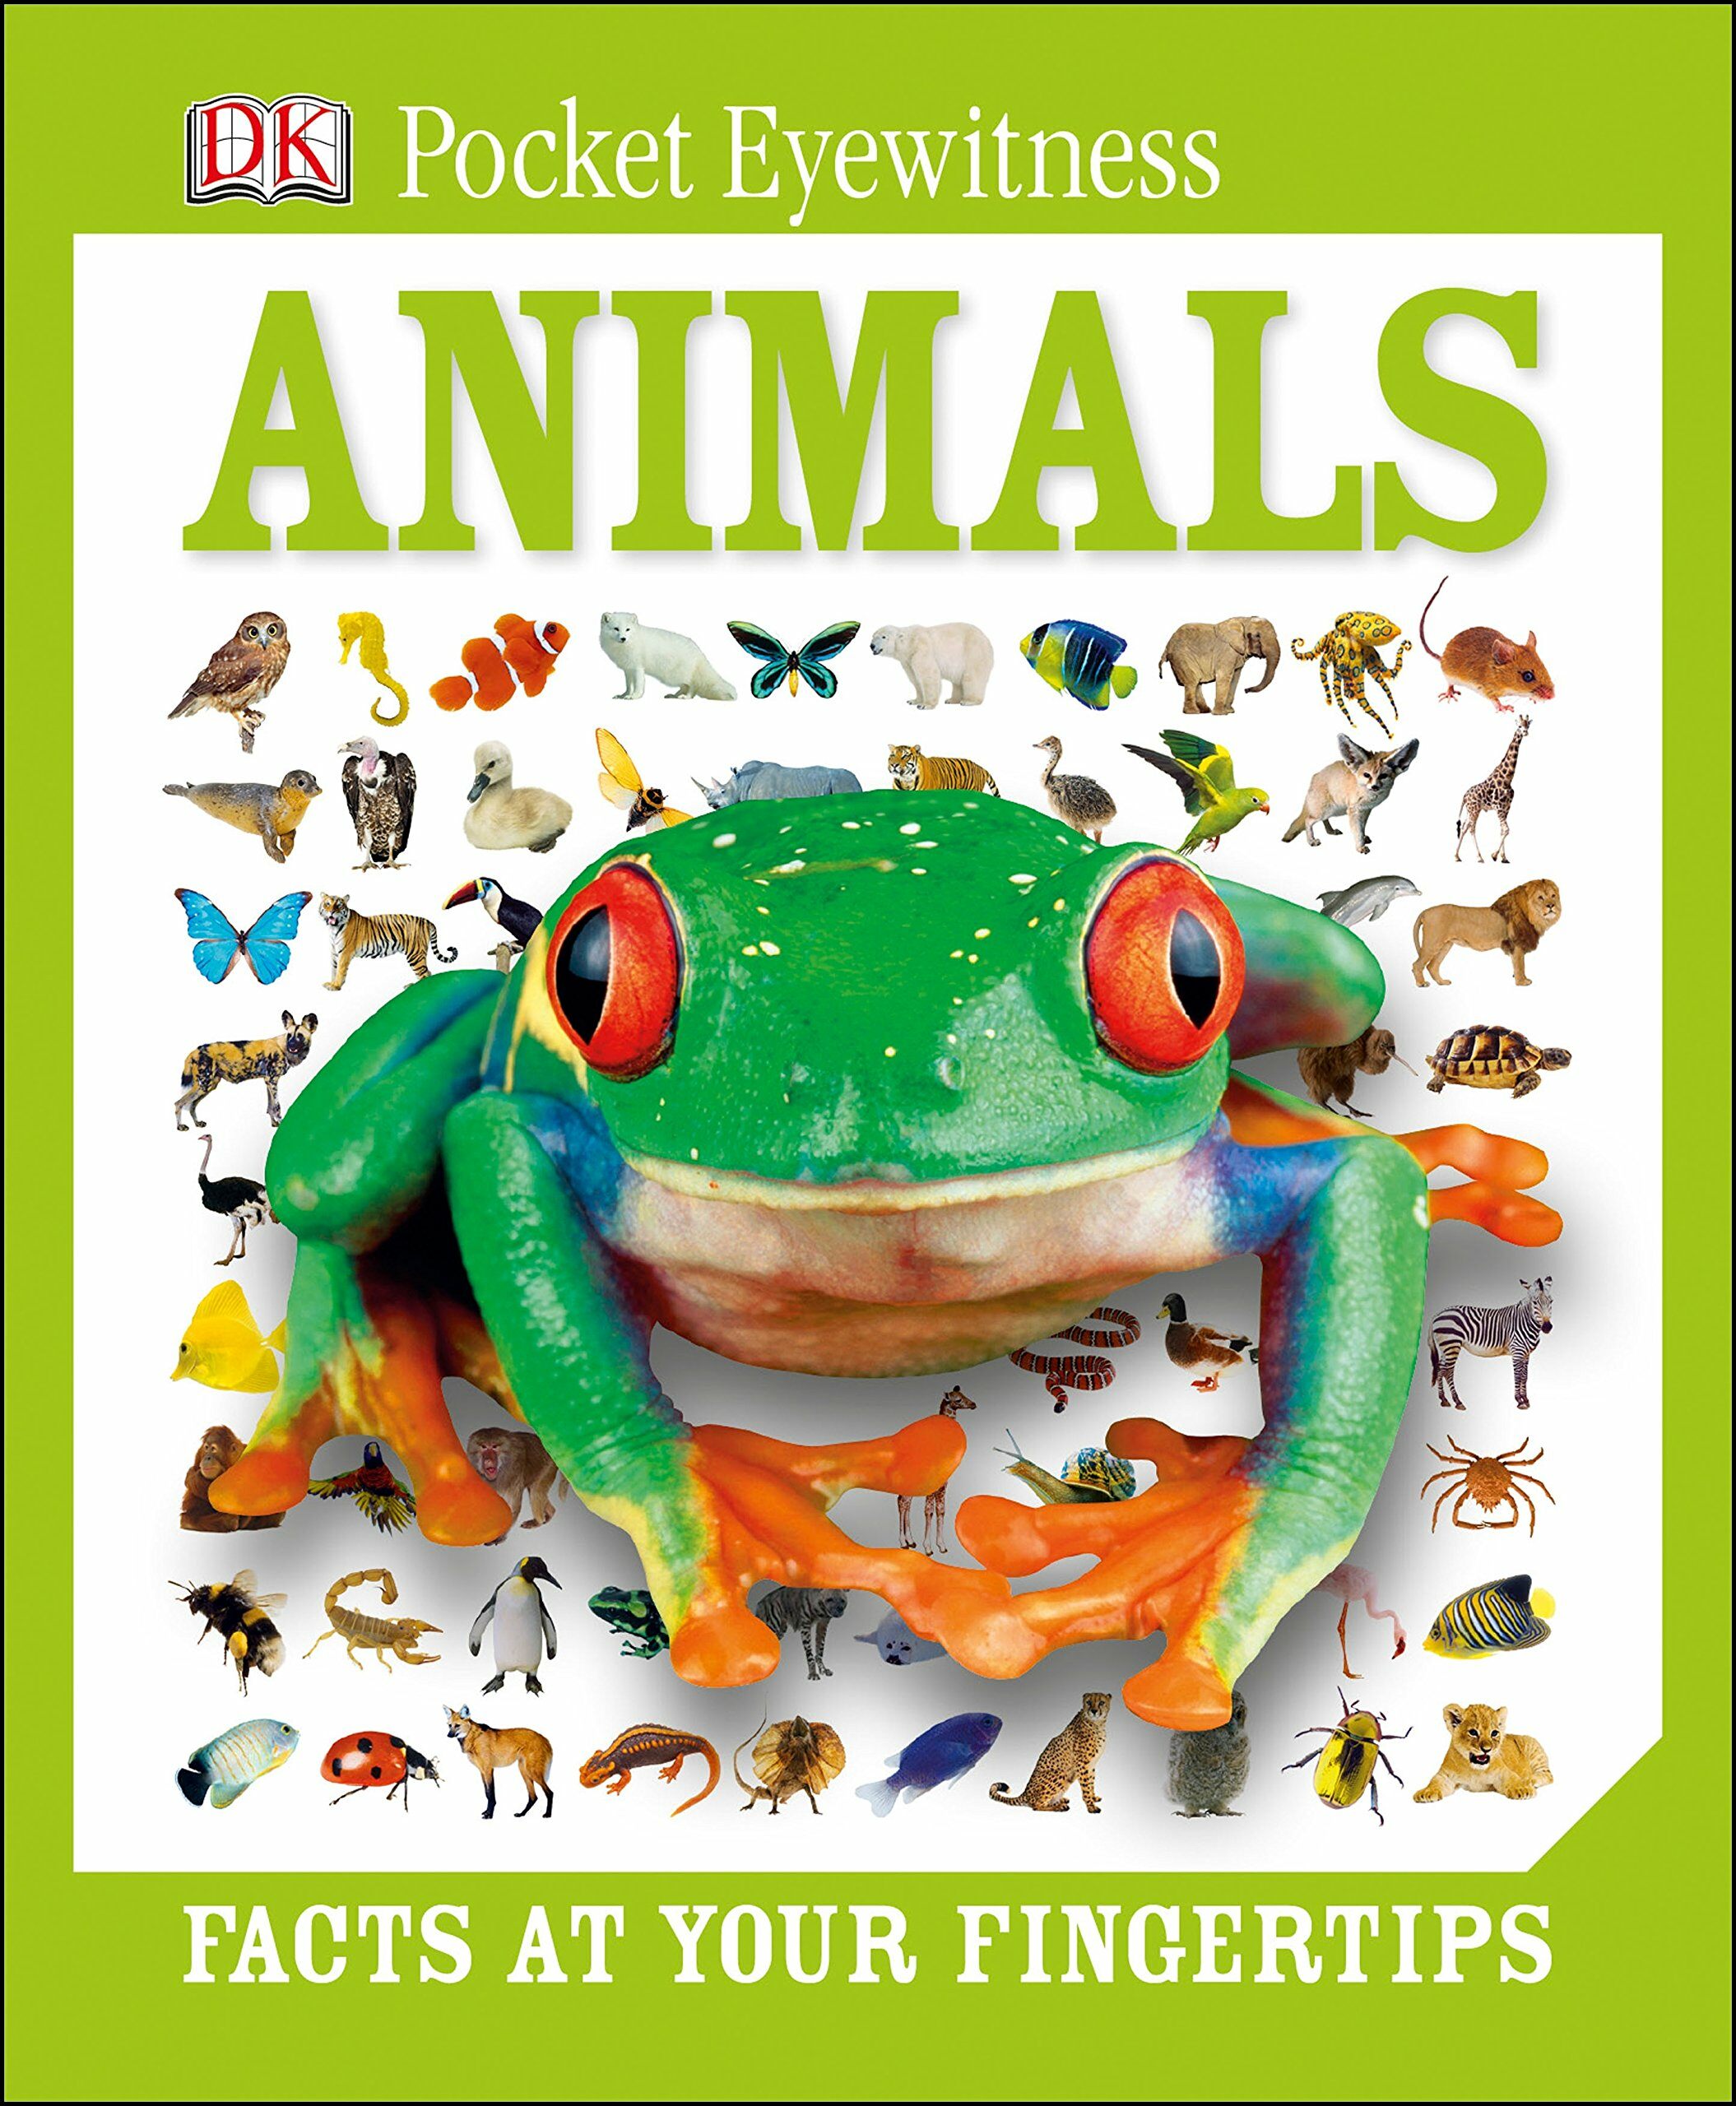 DK Pocket Eyewitness : Animals (Hardcover)